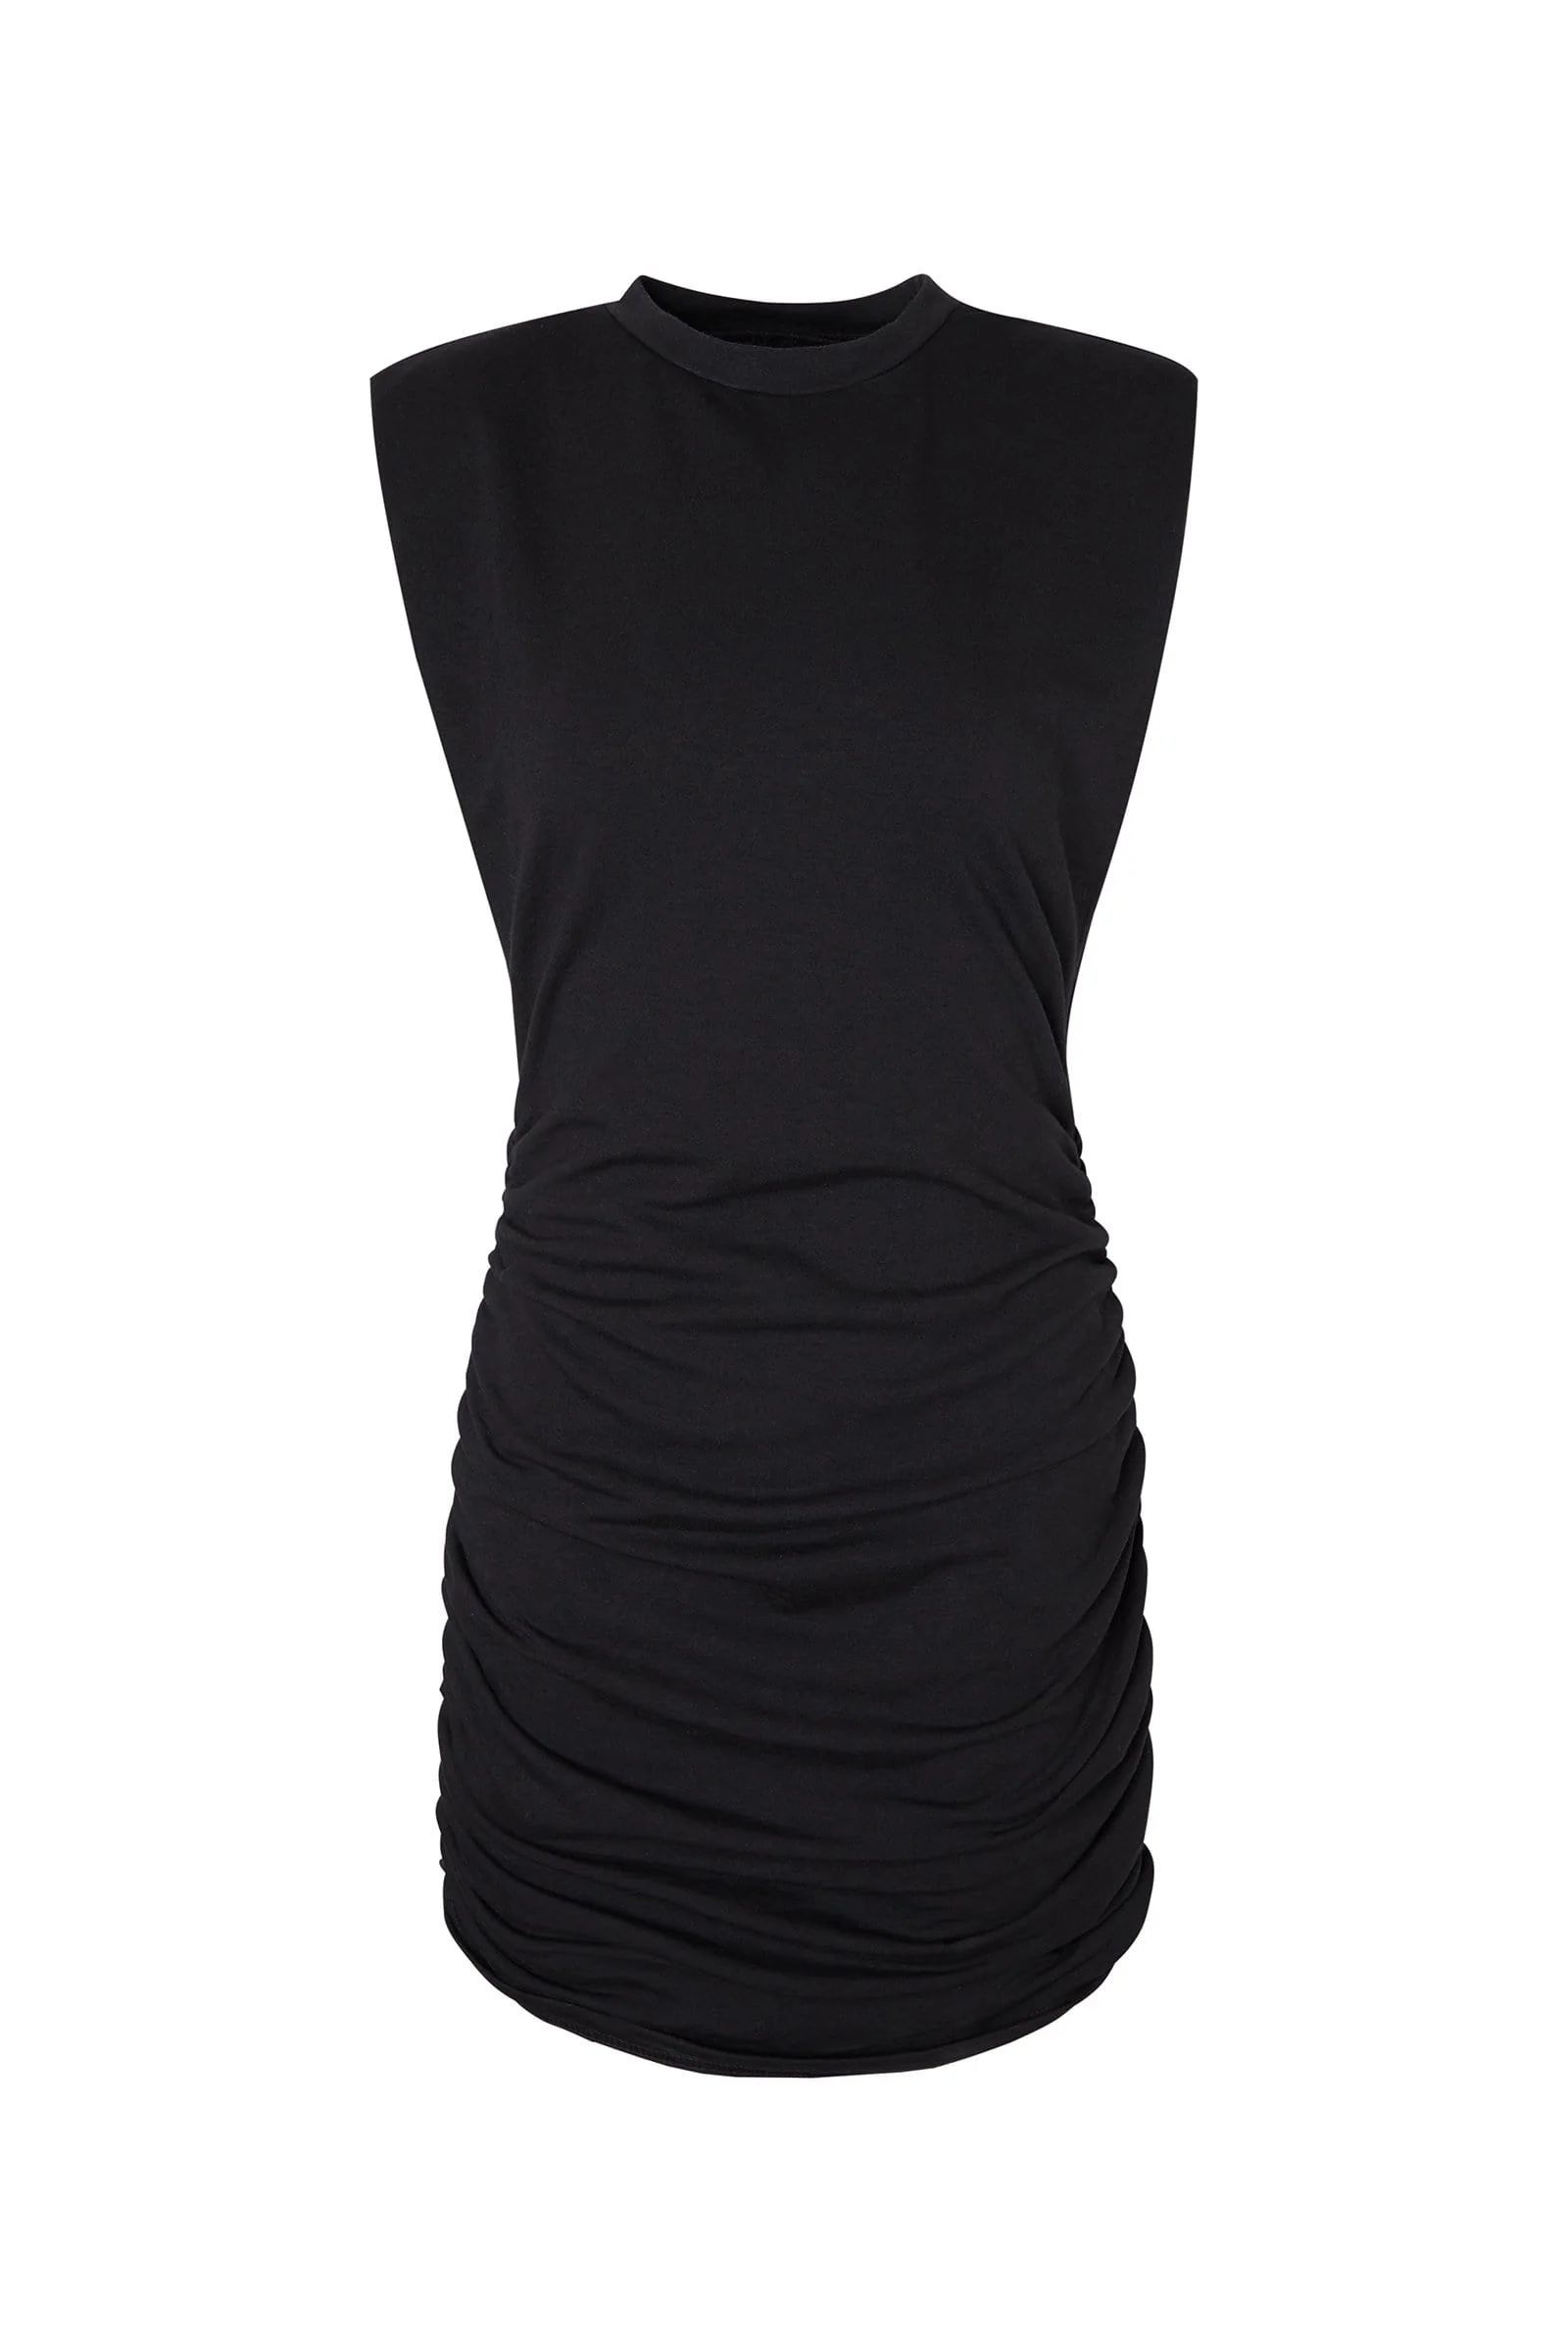 Mykah Black Sleeveless Mini Dress | J.ING